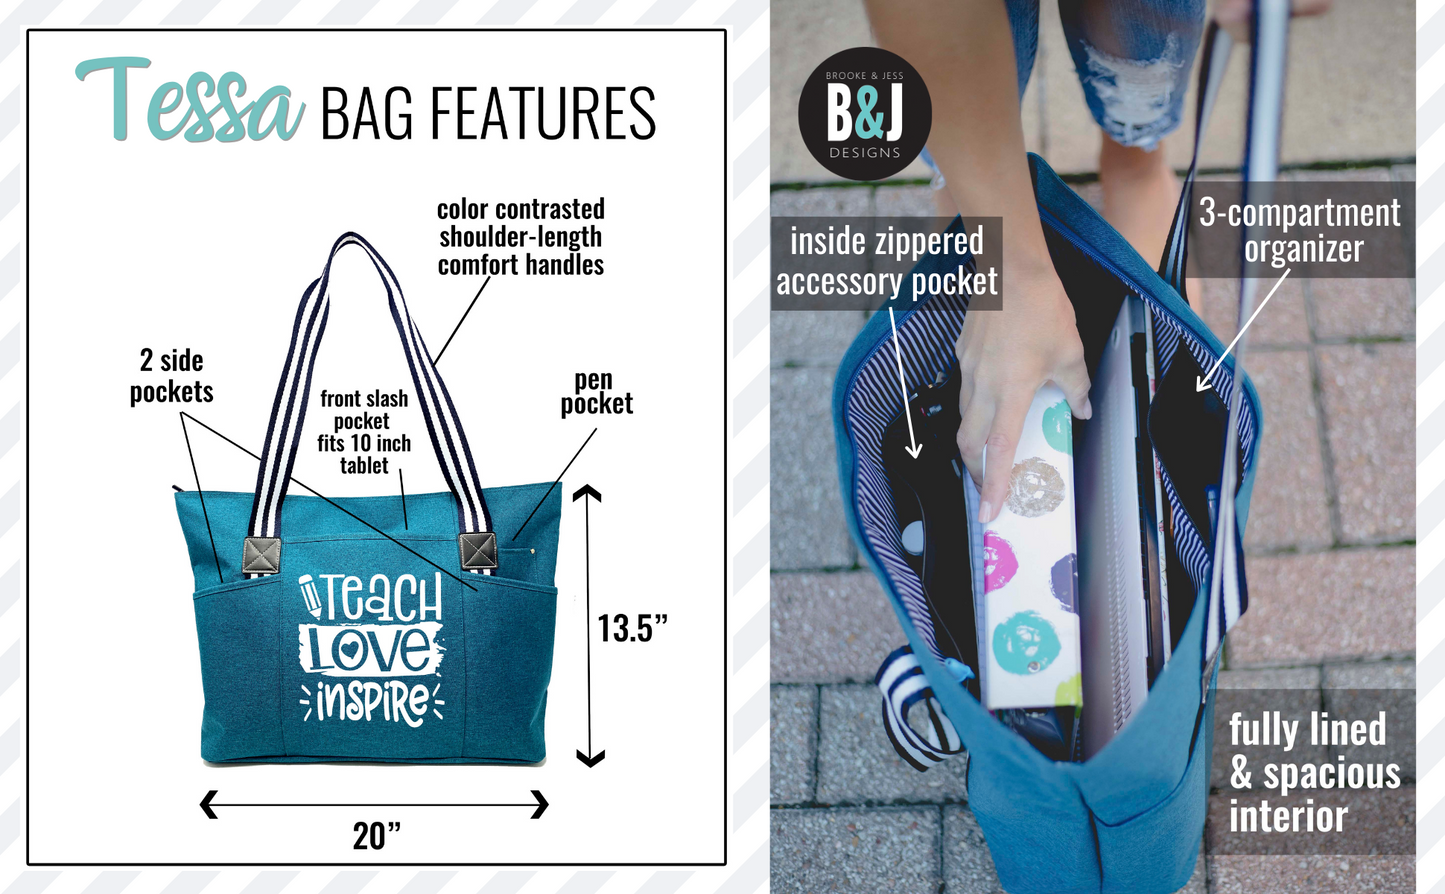 Teach Love Inspire Tessa Teal Tote Bag for Teachers - Outlet Utah